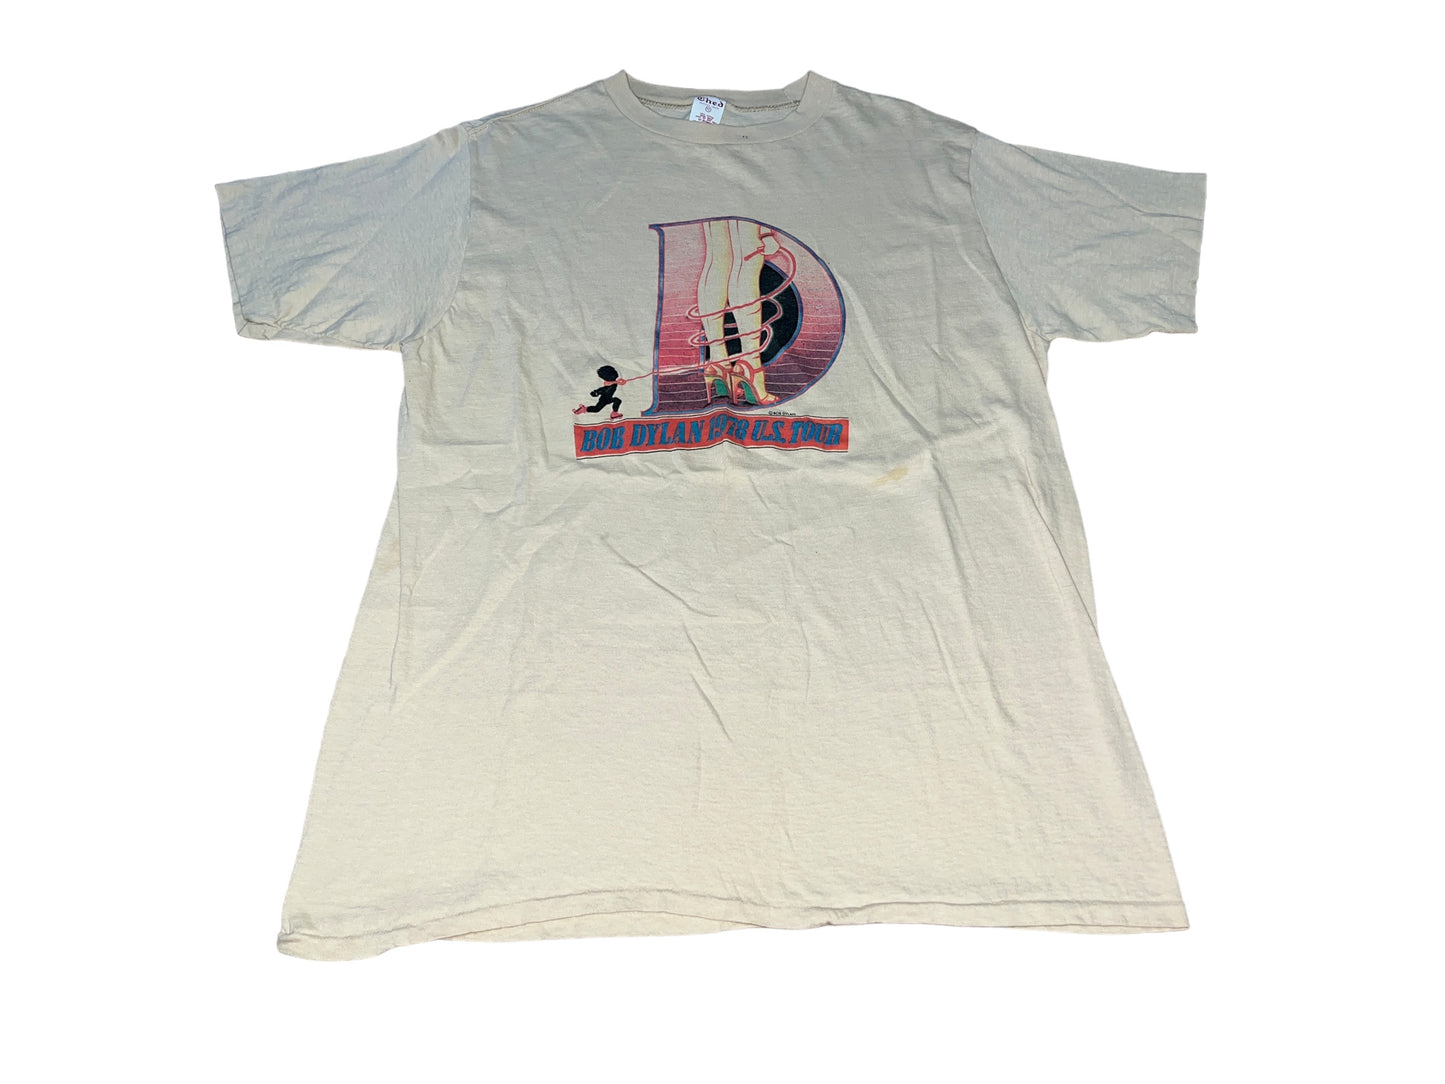 Vintage 80s Bob Dylan T-Shirt